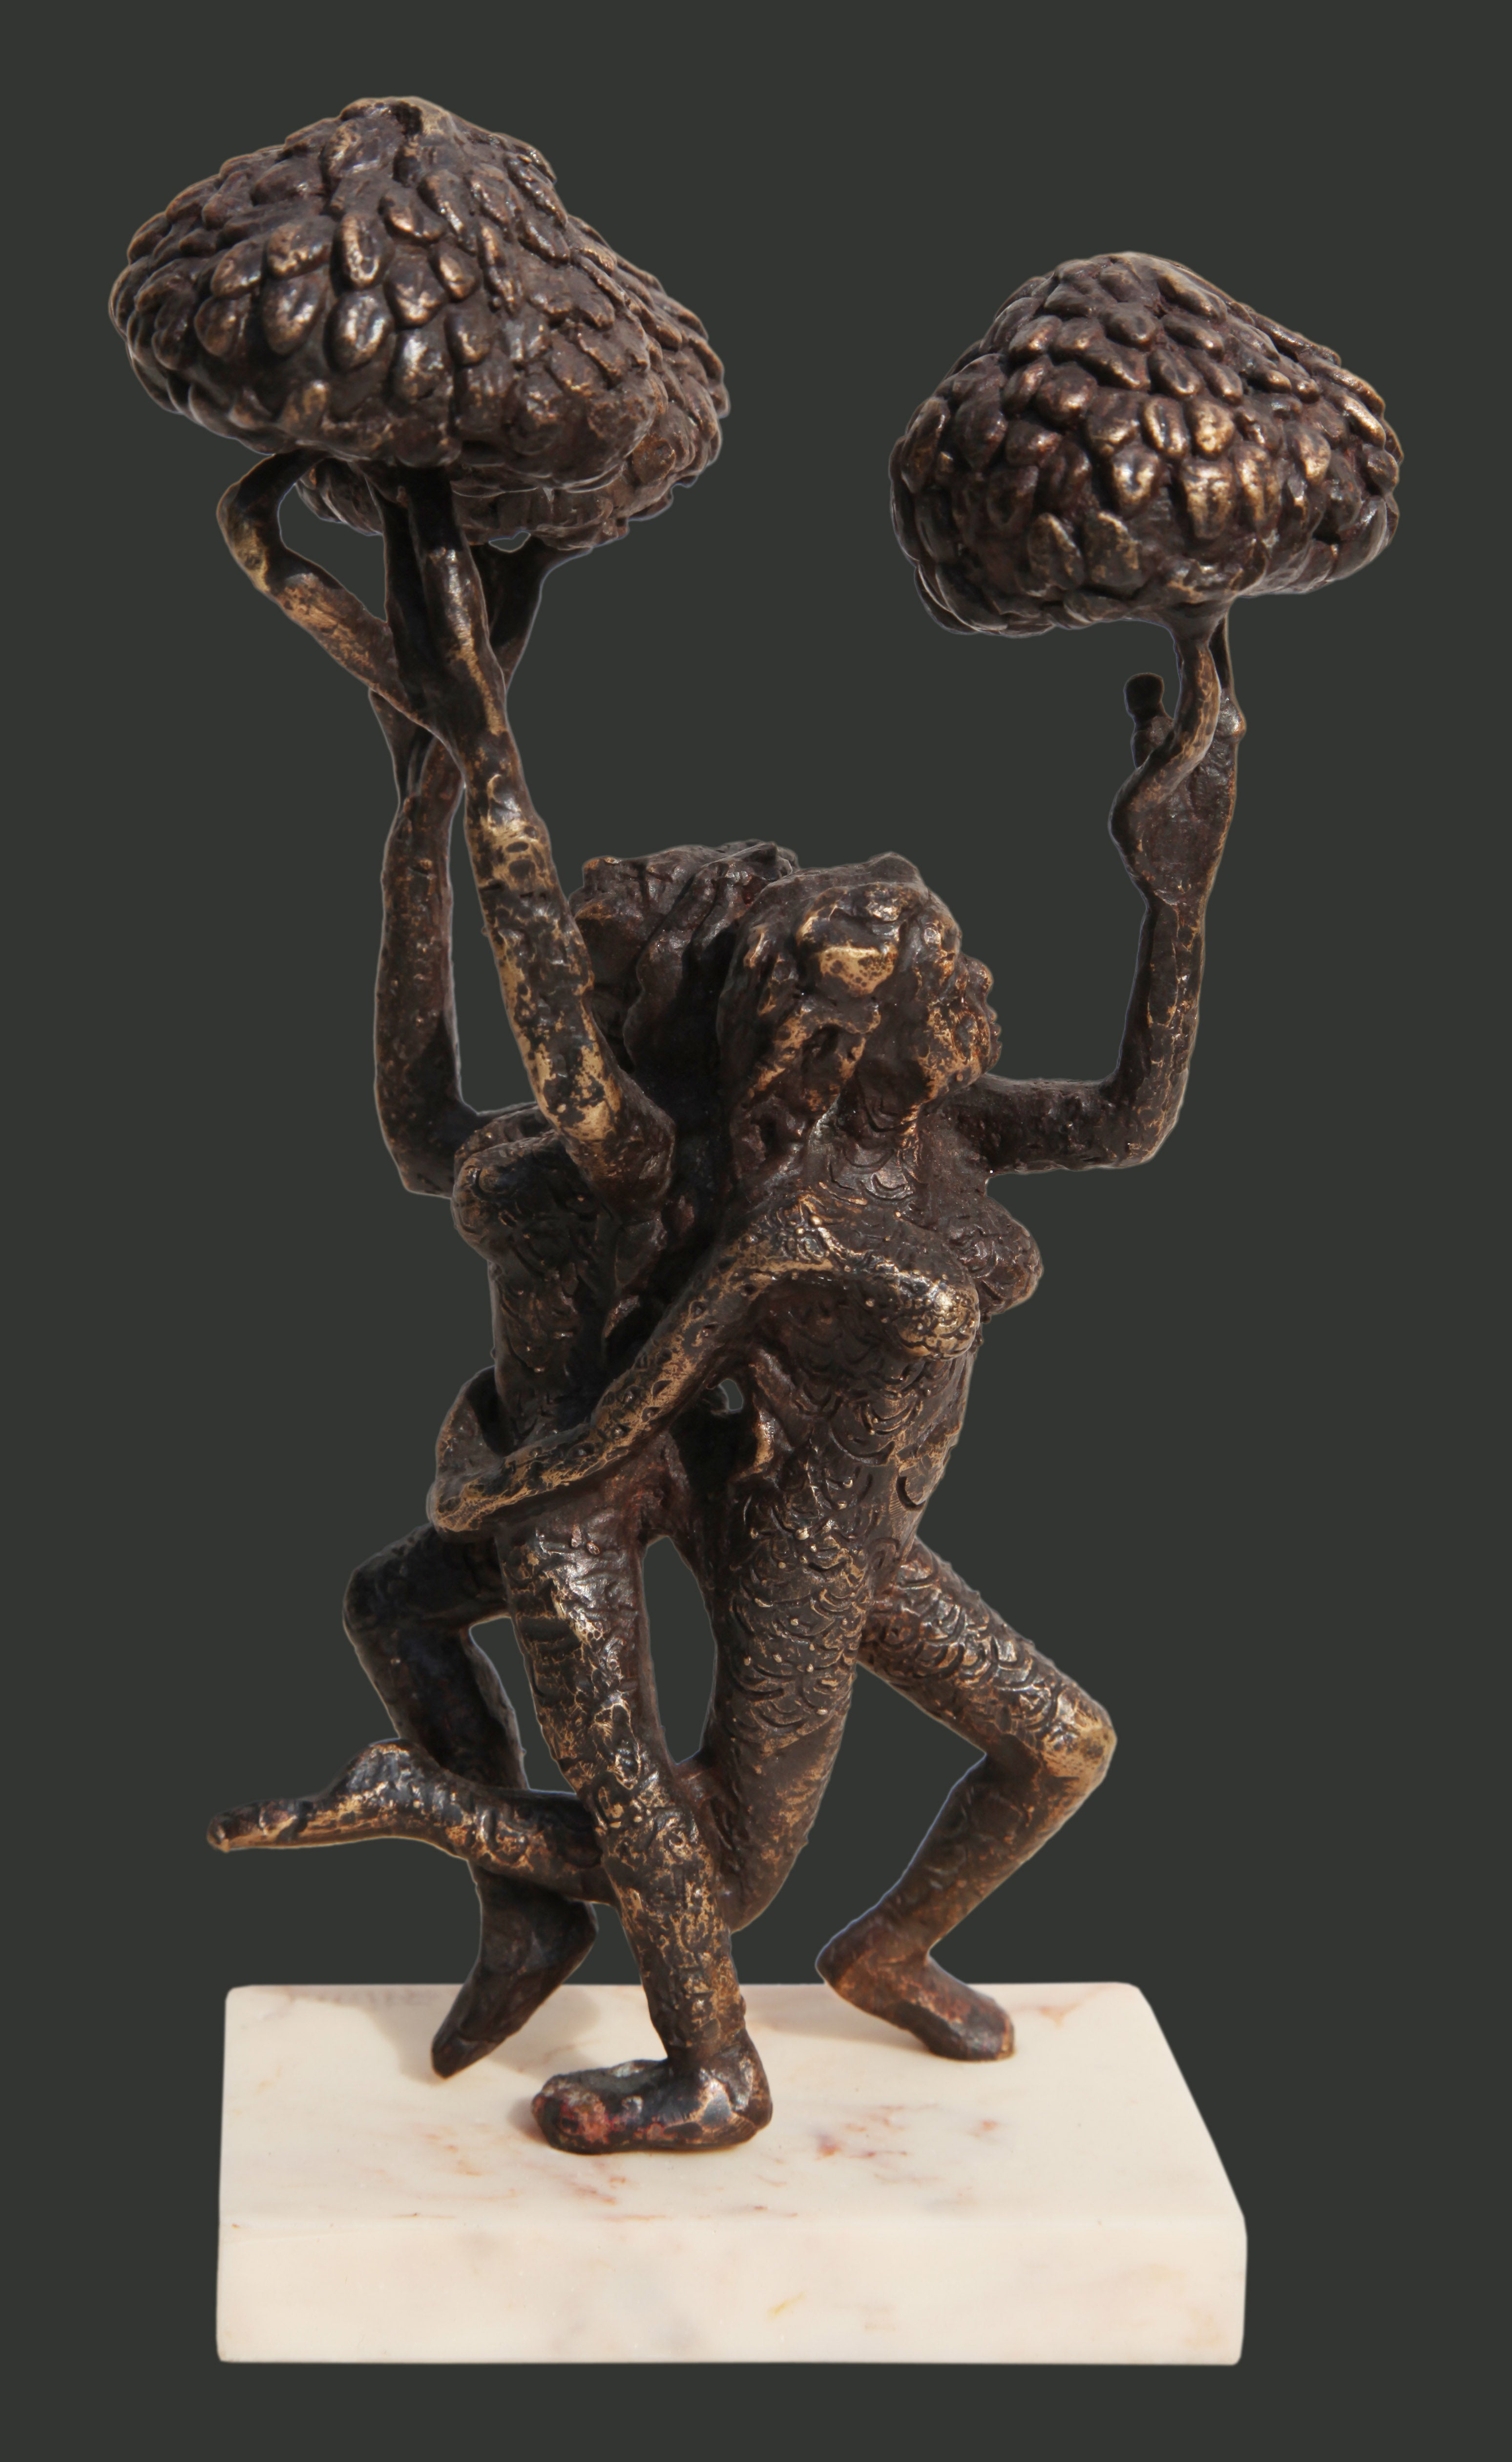 Yogini 2|Seema Kohli- Bronze, 2018, 5 x 8.5 x 4 inches